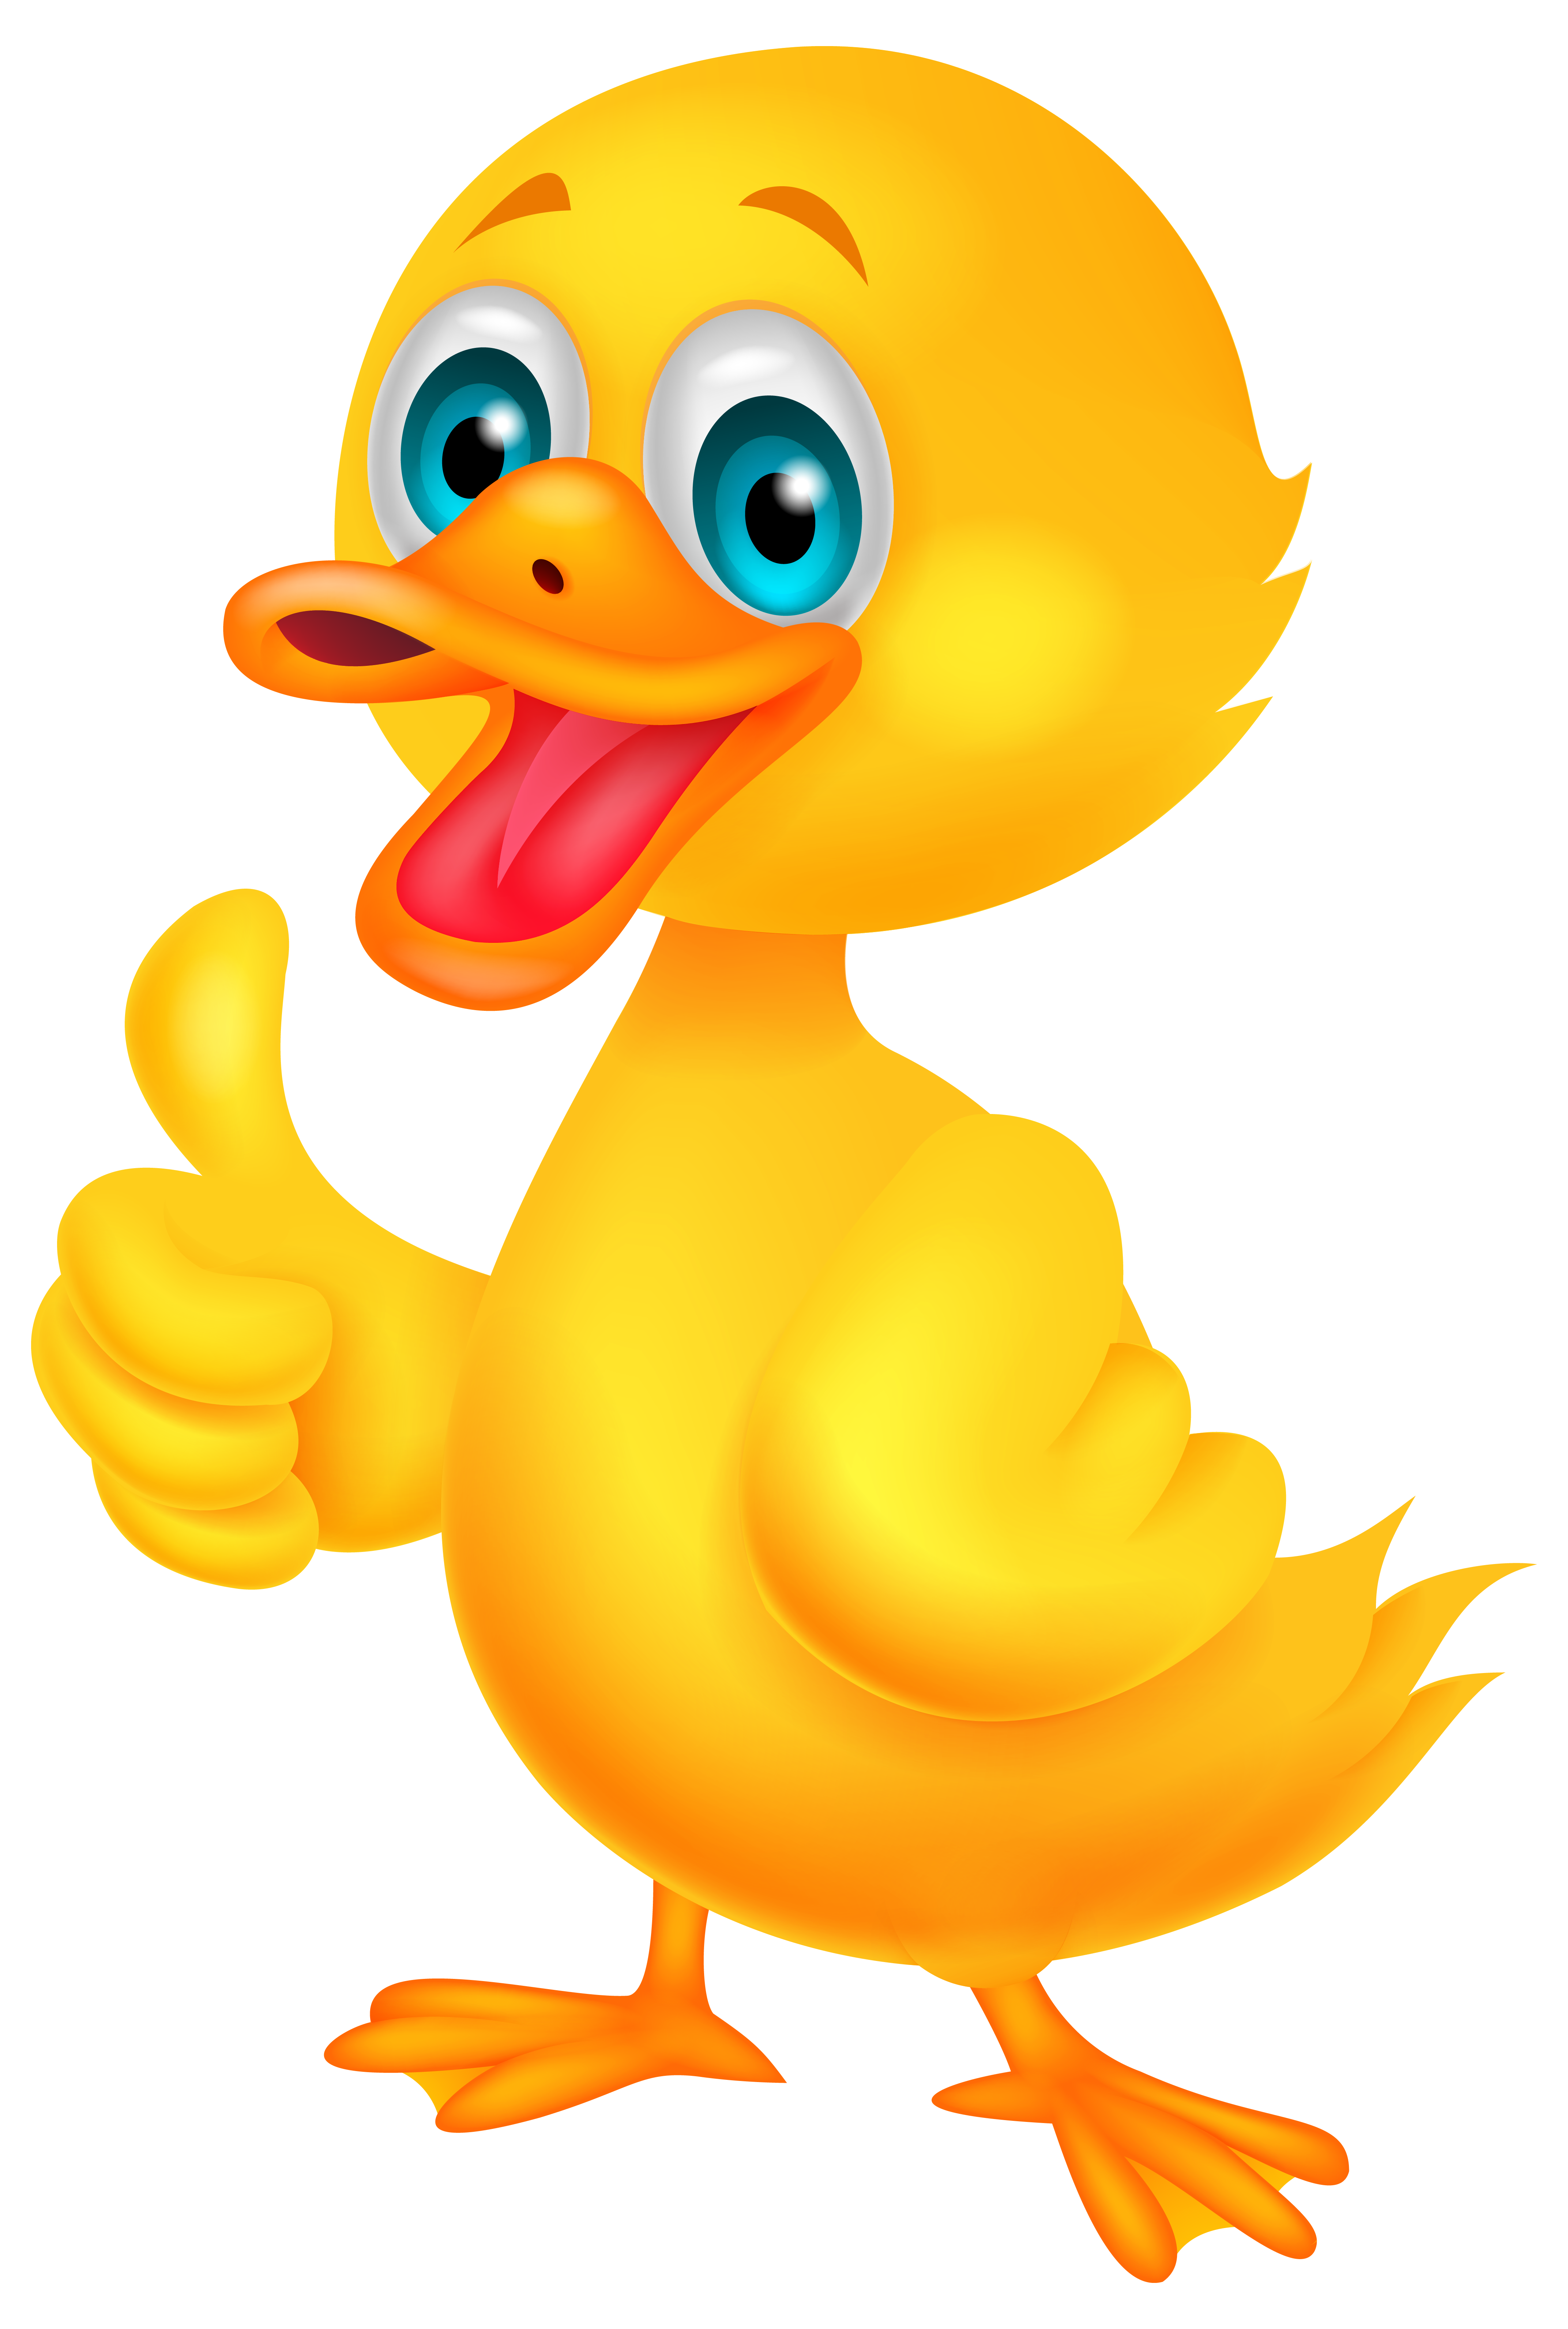 Swimmer clipart cartoon. Duck toy animal yellow